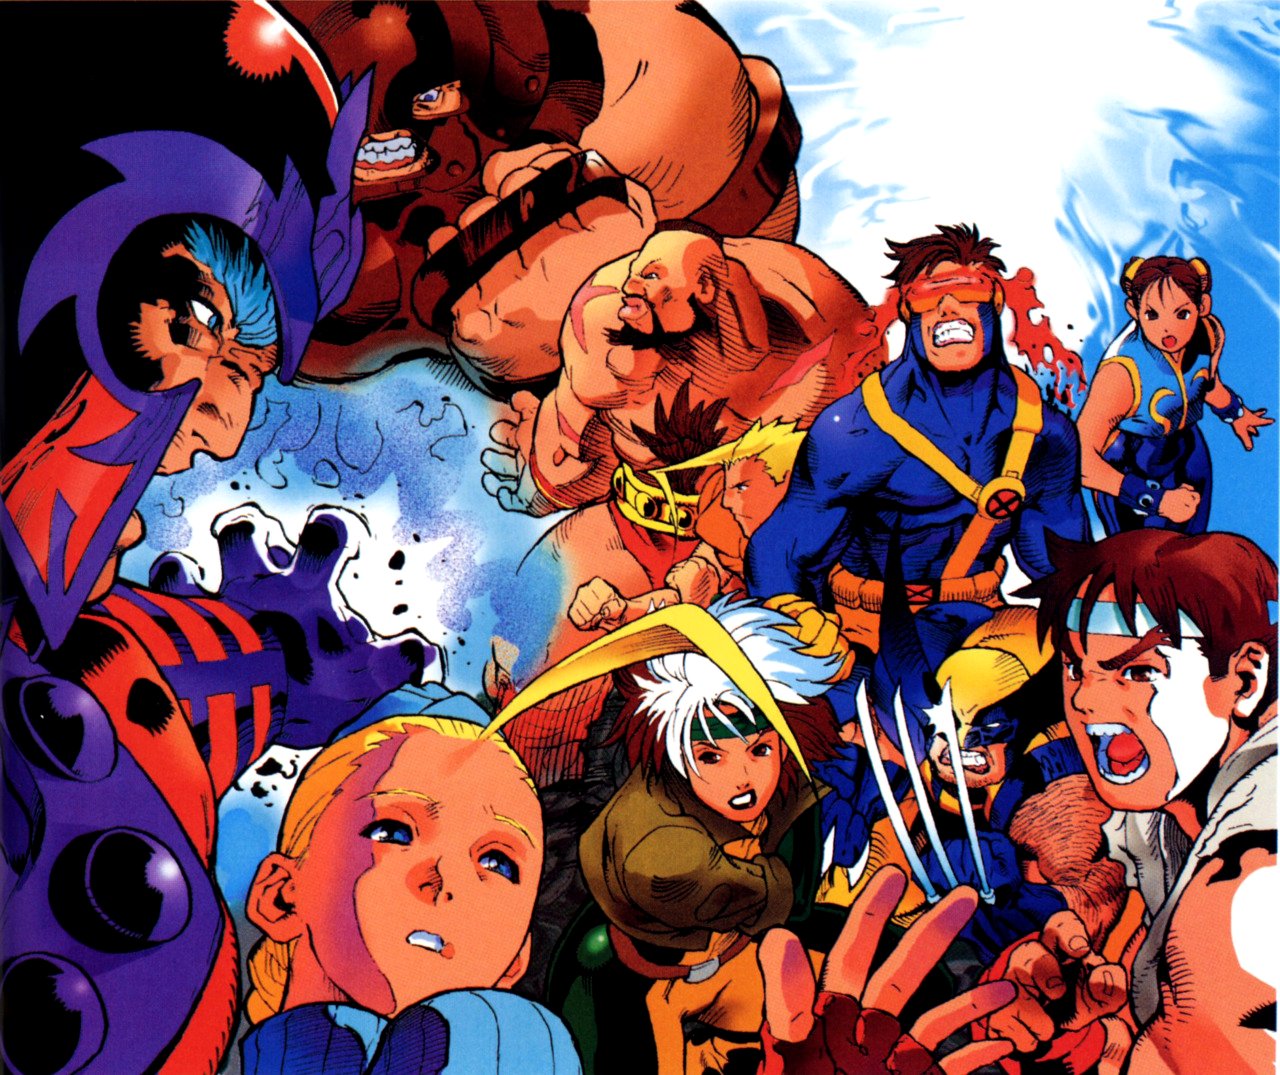 X-Men vs. Street Fighter.